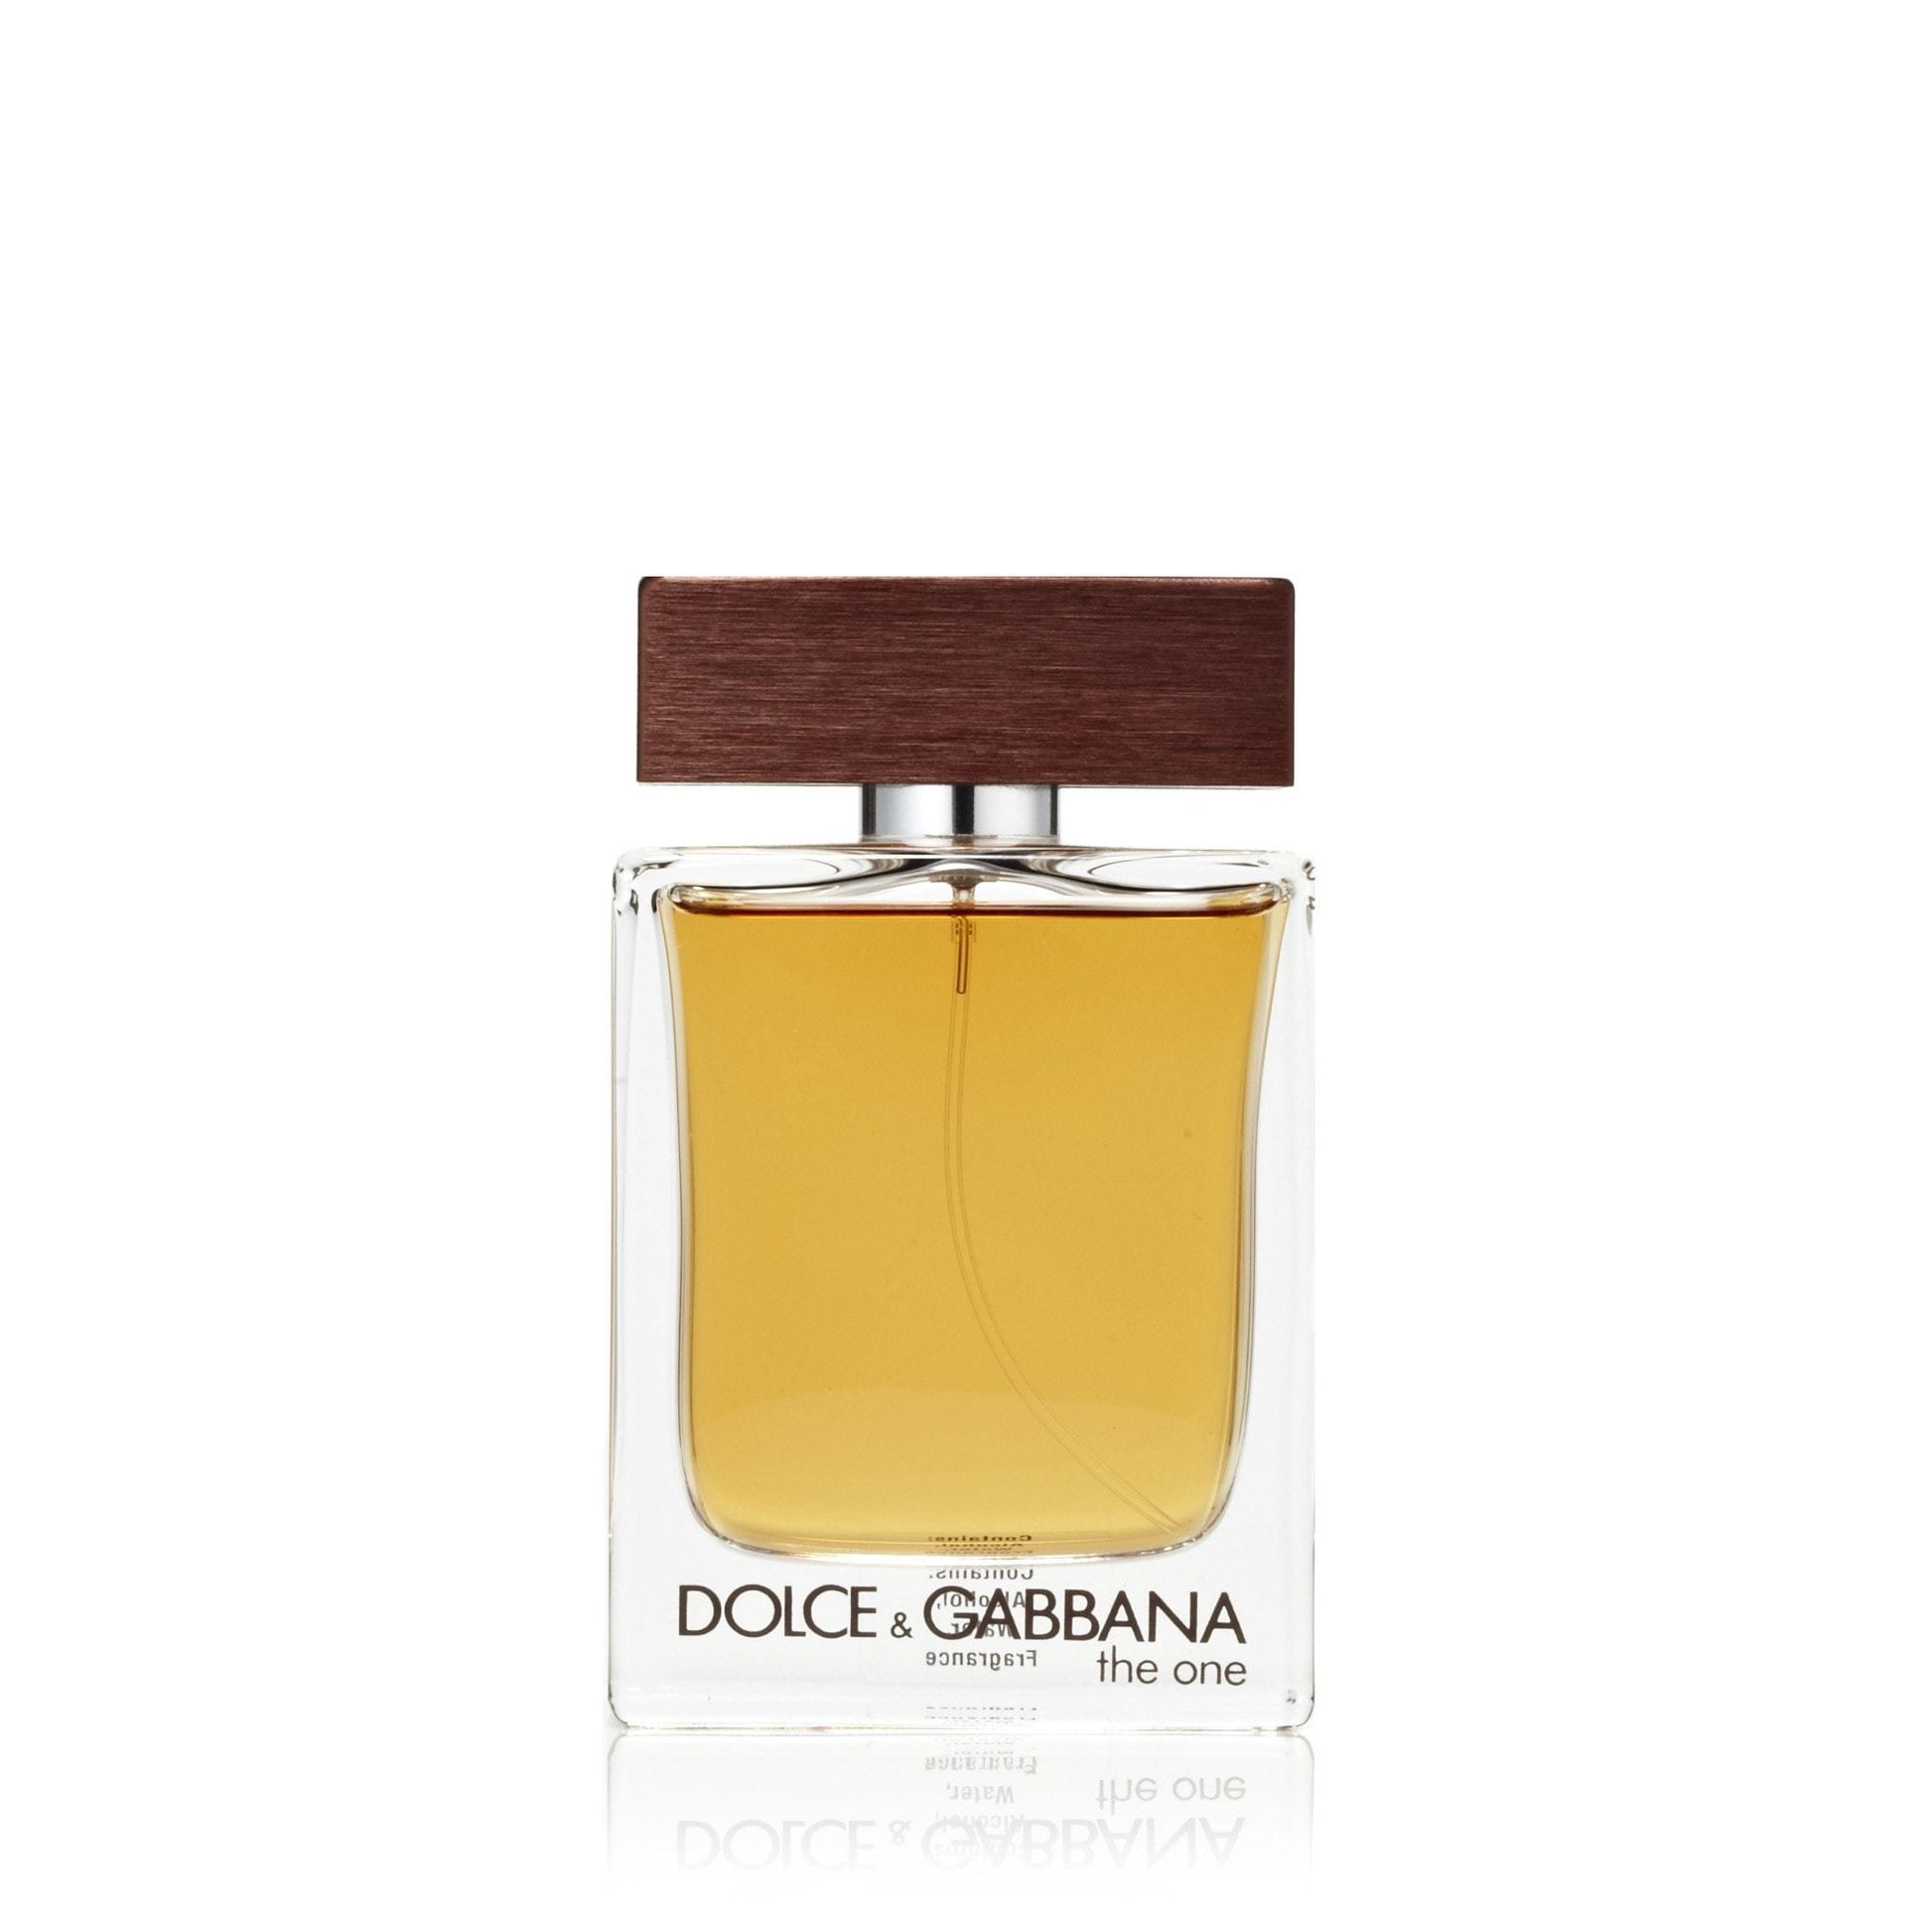 The One Eau de Toilette Spray for Men by Dolce & Gabbana, Product image 8